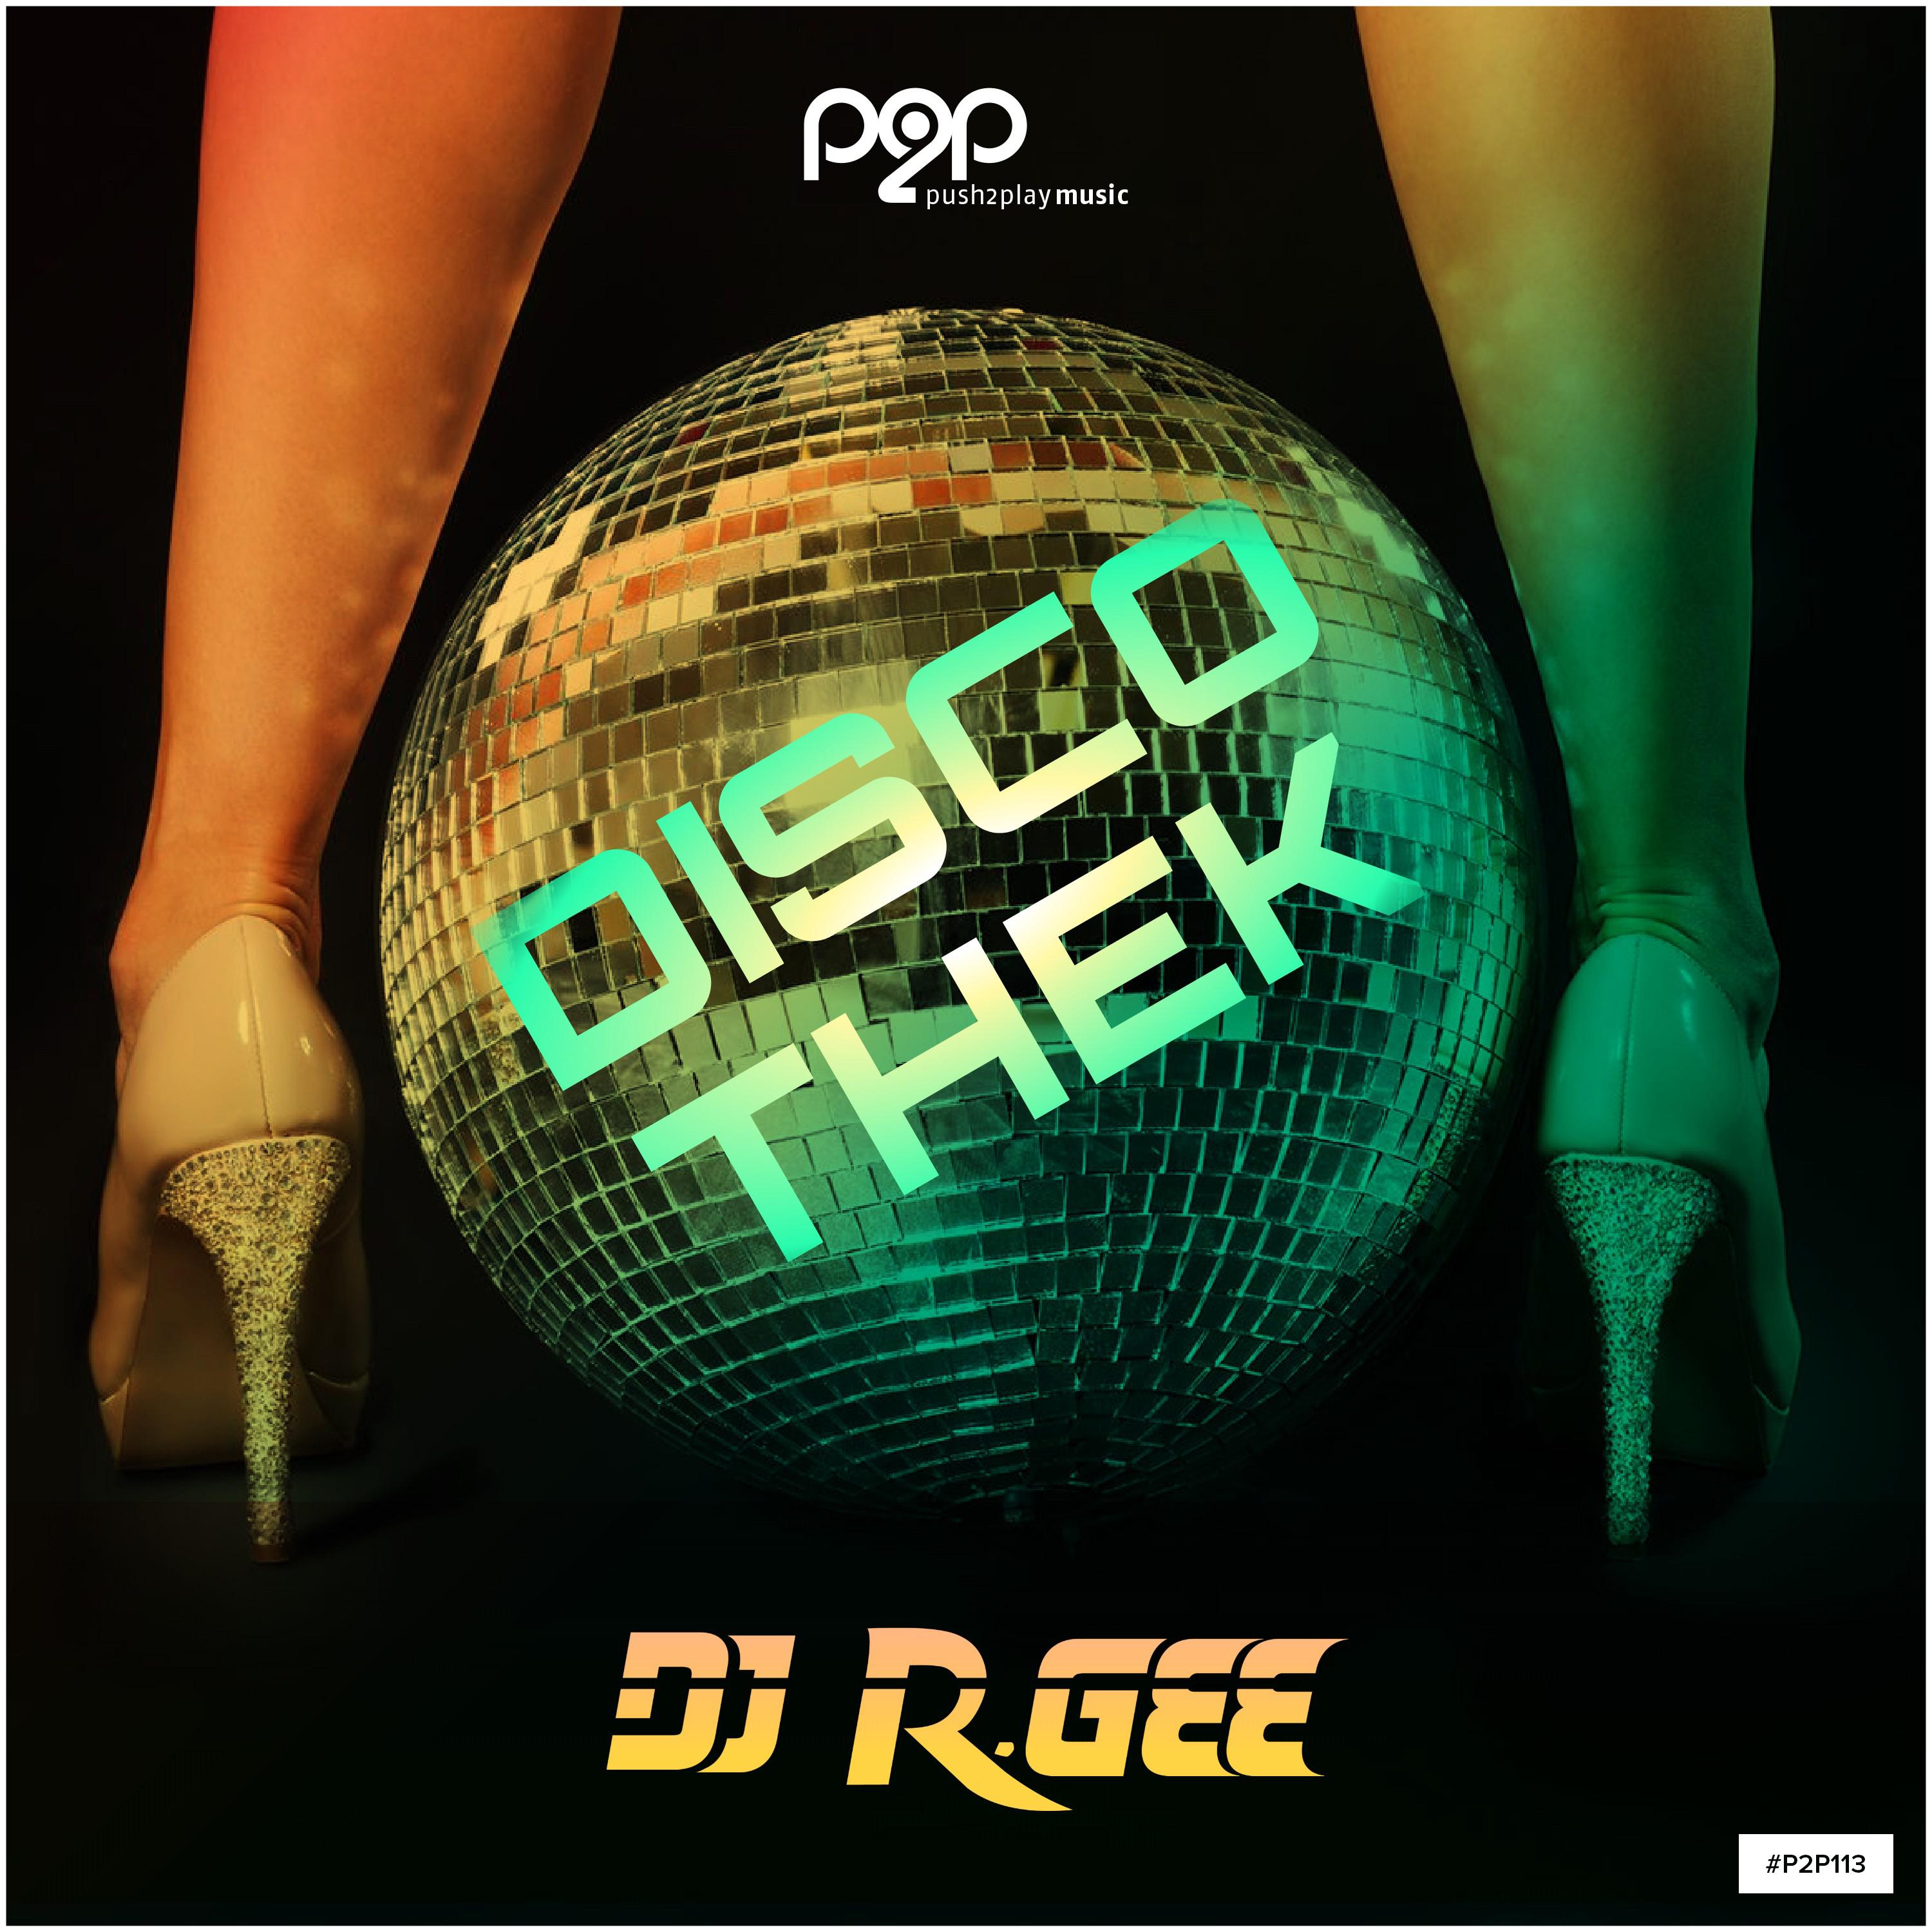 DJ R.Gee - Discothek (Cloud Seven Remix Edit)